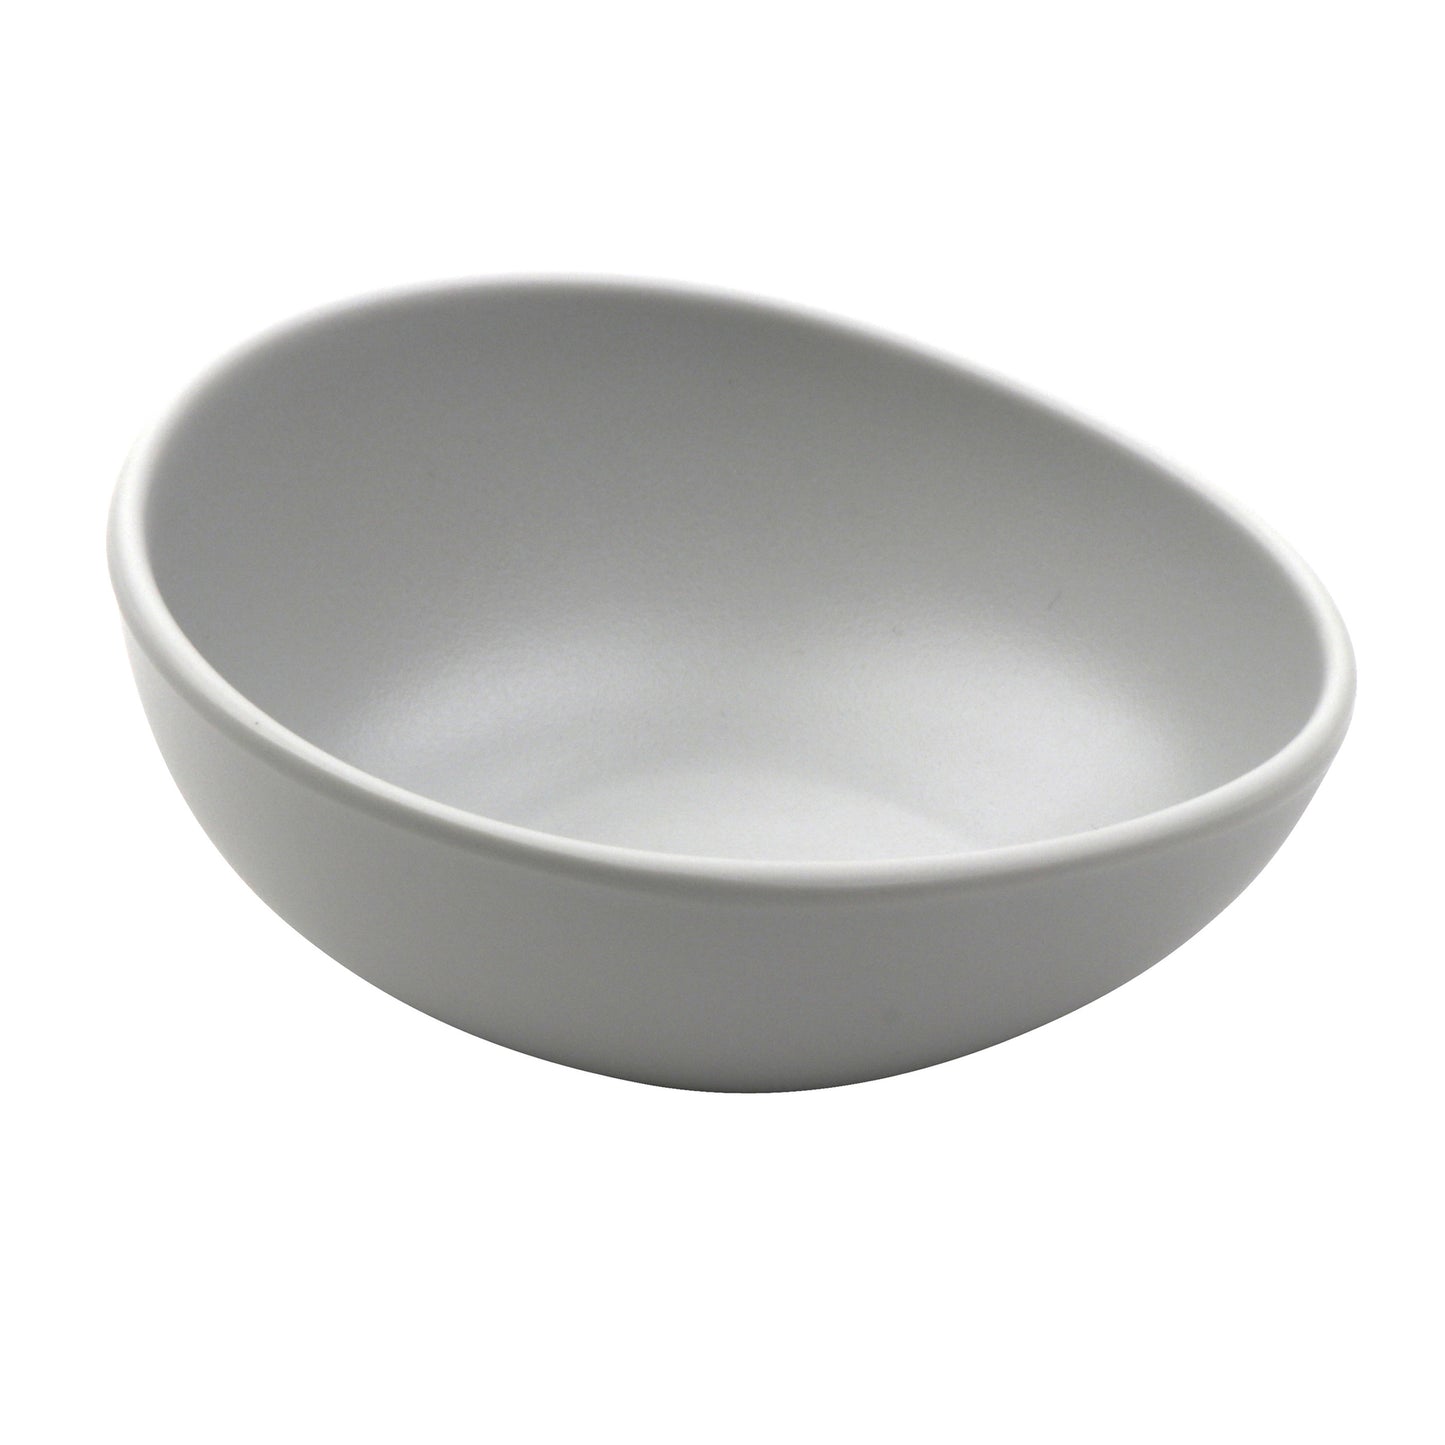 8 oz. Light Gray, Melamine, Small Side Dish/Soup Bowl, (11 oz. rim-full), 1.8" H, (2.1" Max H), 5.1" L x 4.4" W, G.E.T. Riverstone (12 Pack)